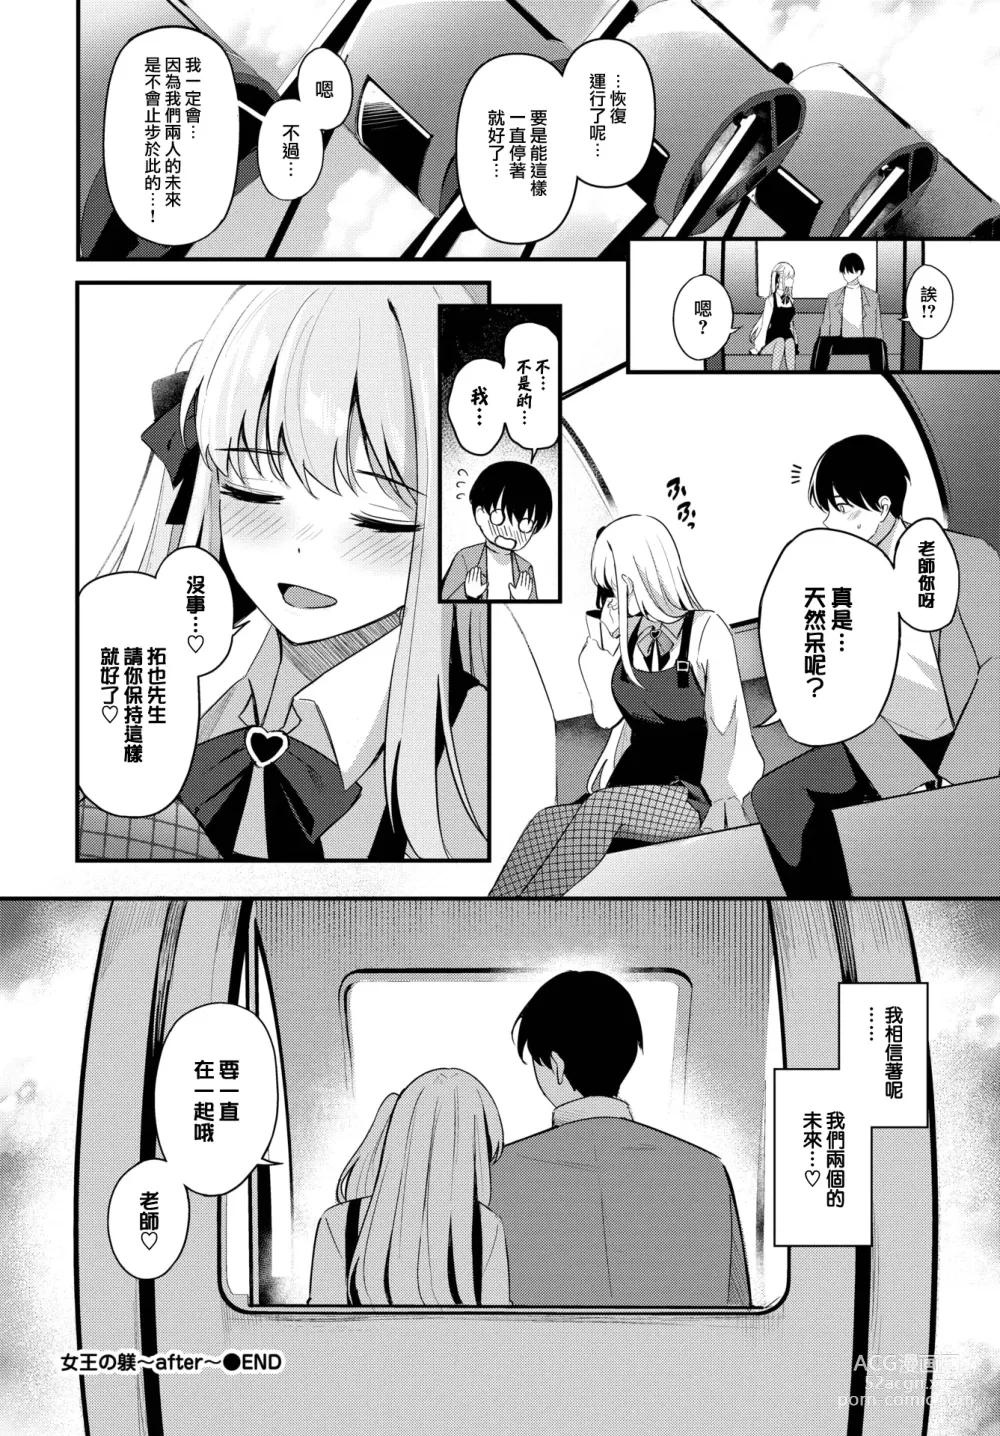 Page 11 of manga Joou no Shitsuke - Queens discipline ~after~